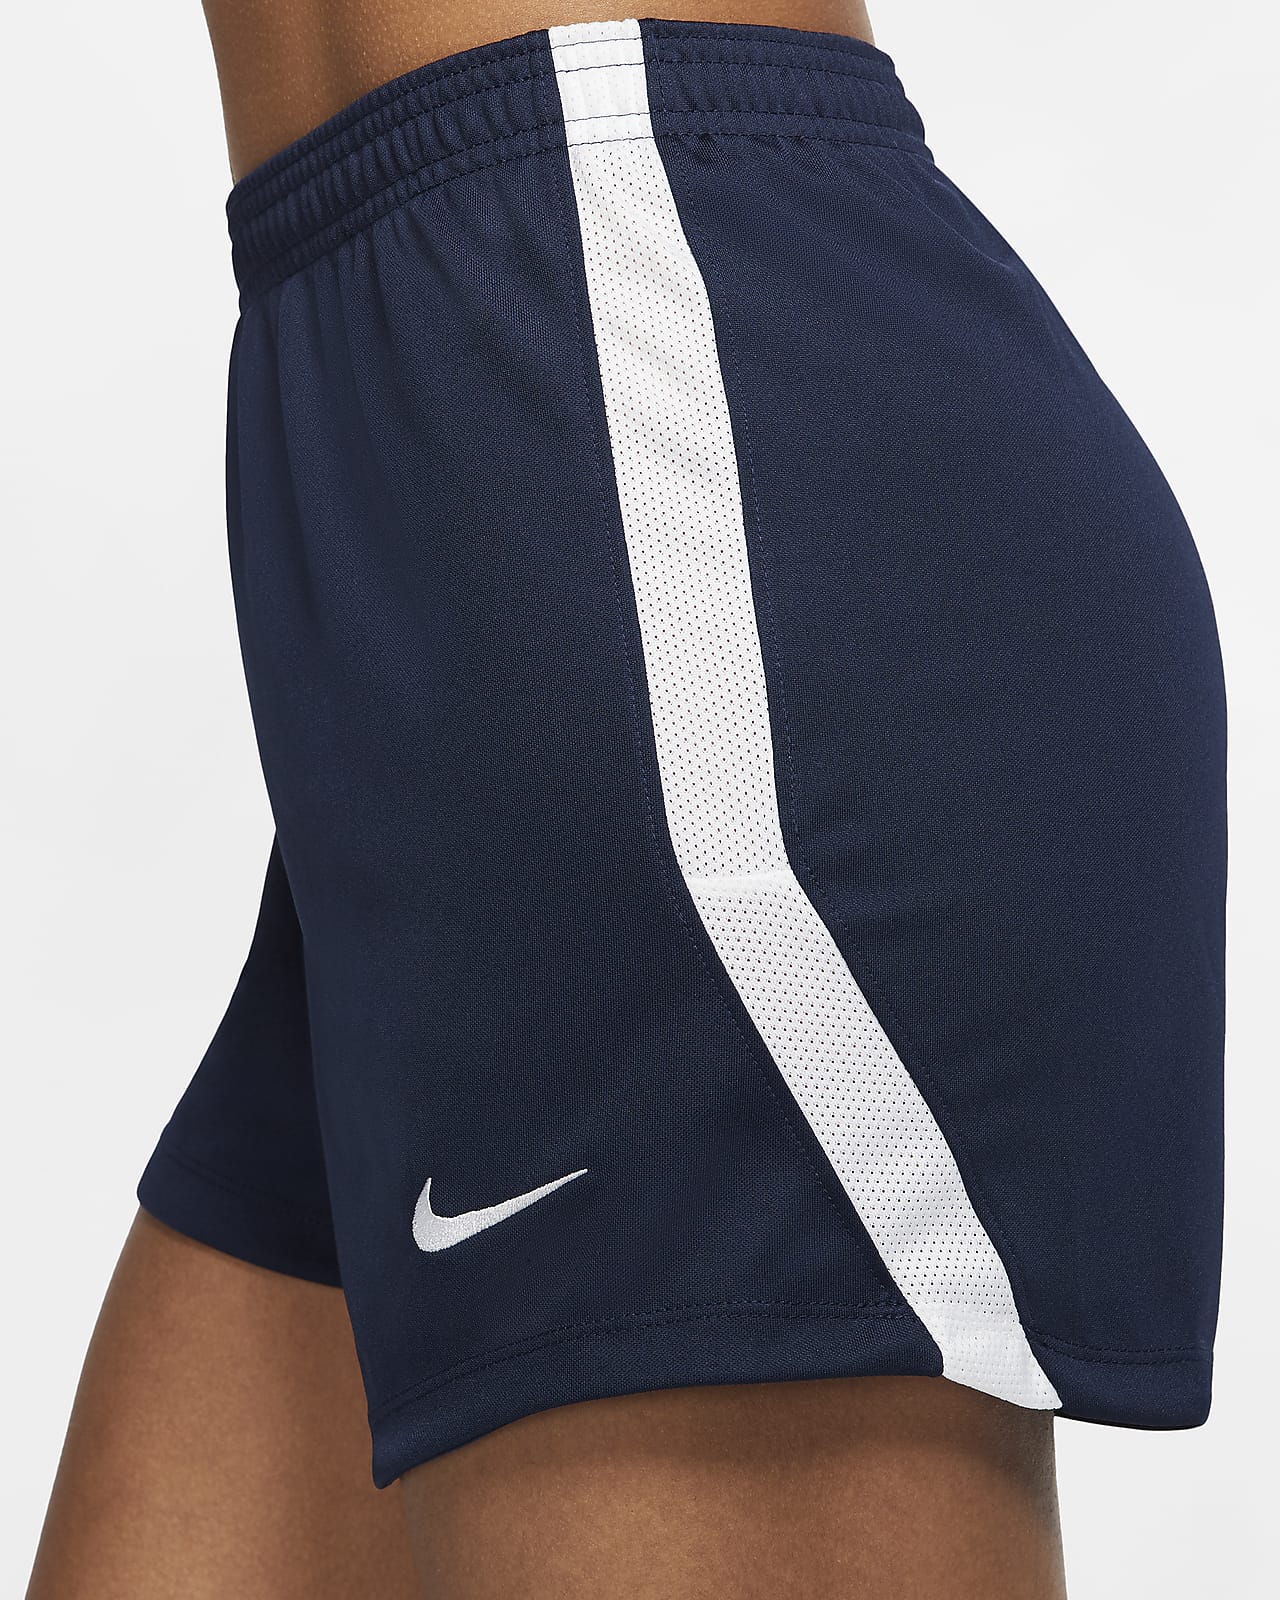 Shorts de fútbol tejidos para mujer Nike Dri-FIT Classic. Nike.com